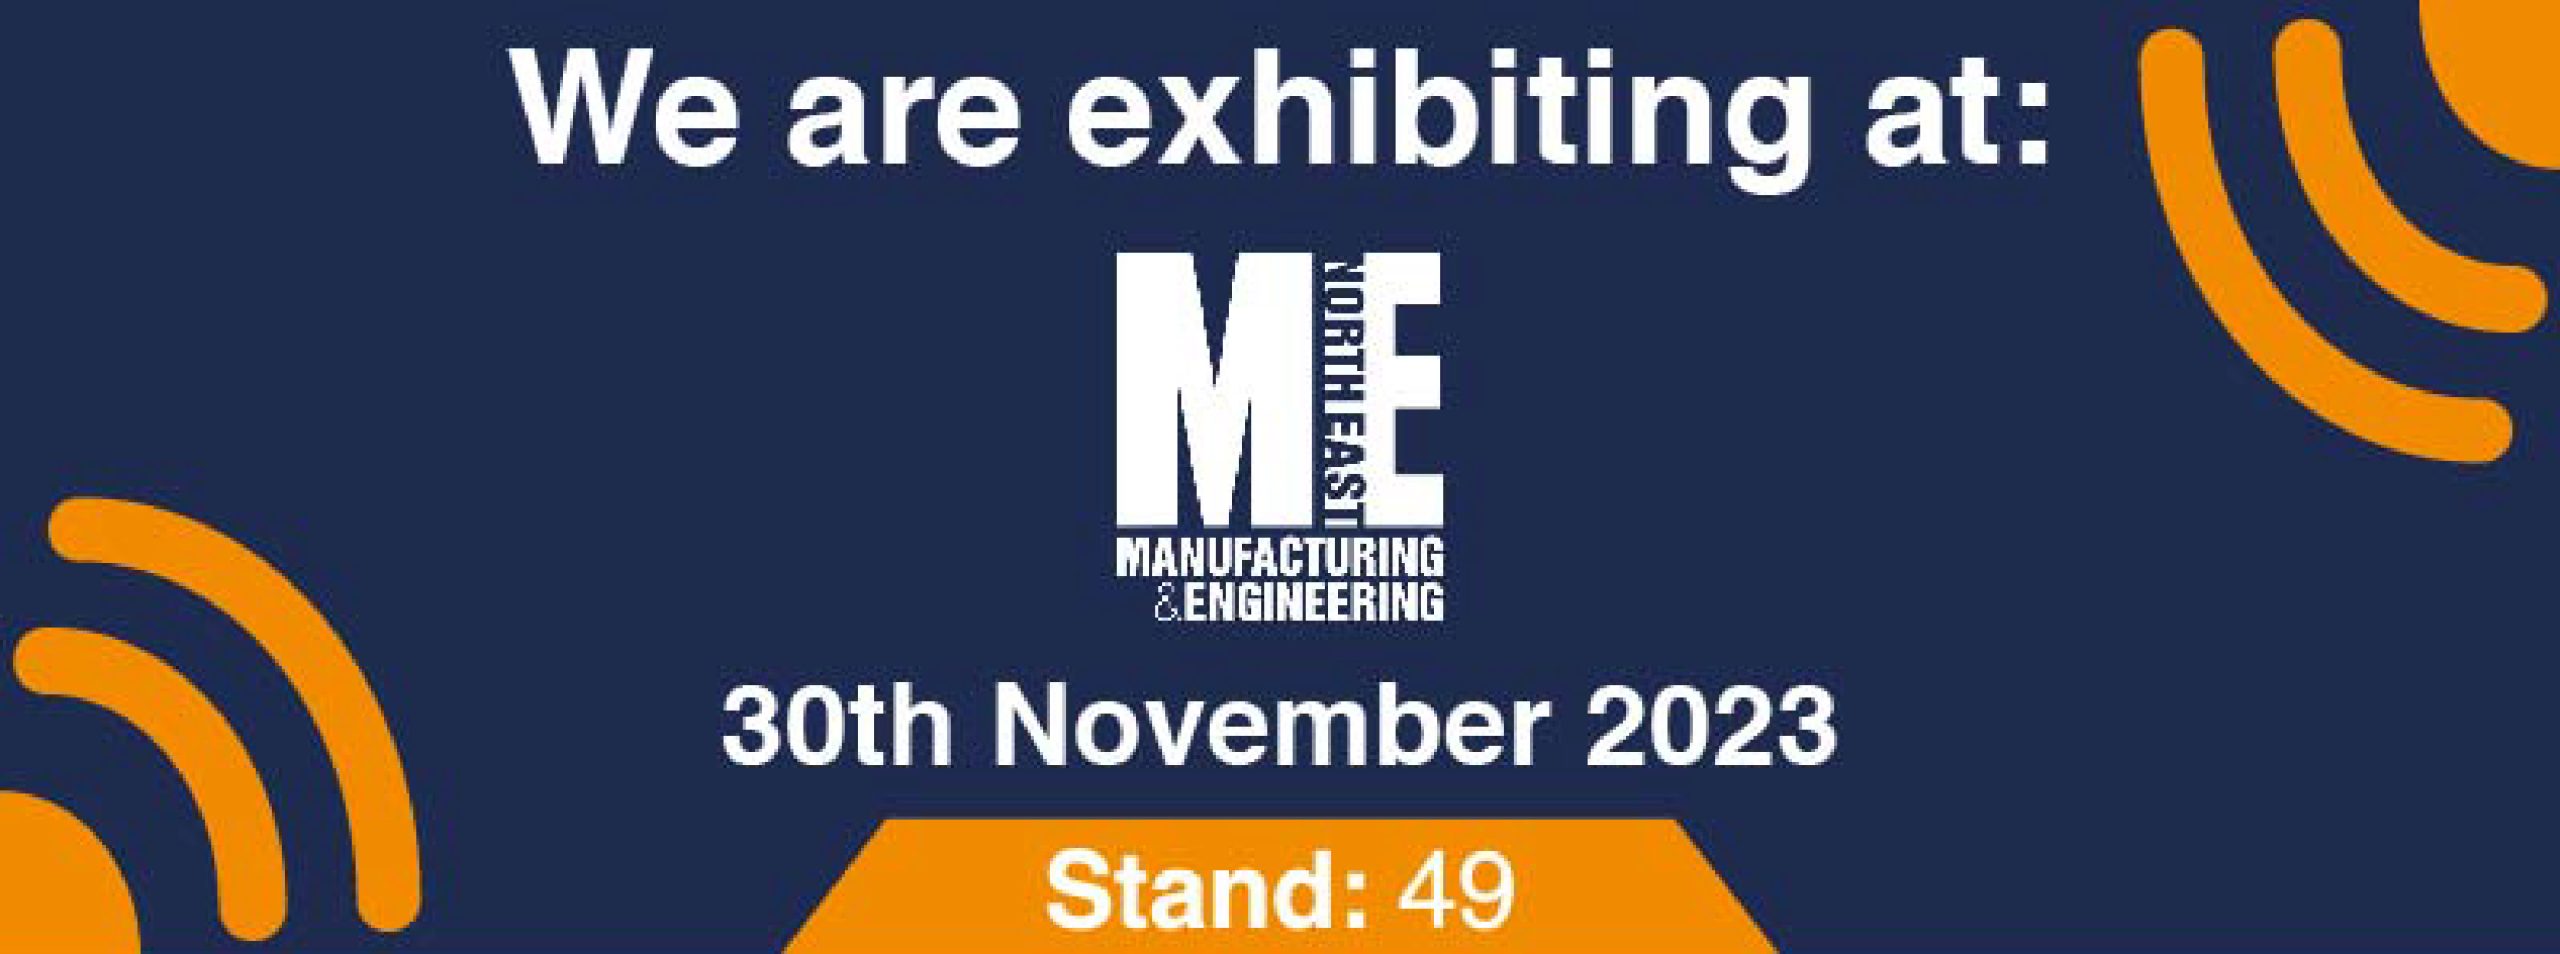 MENE exhibition banner/image